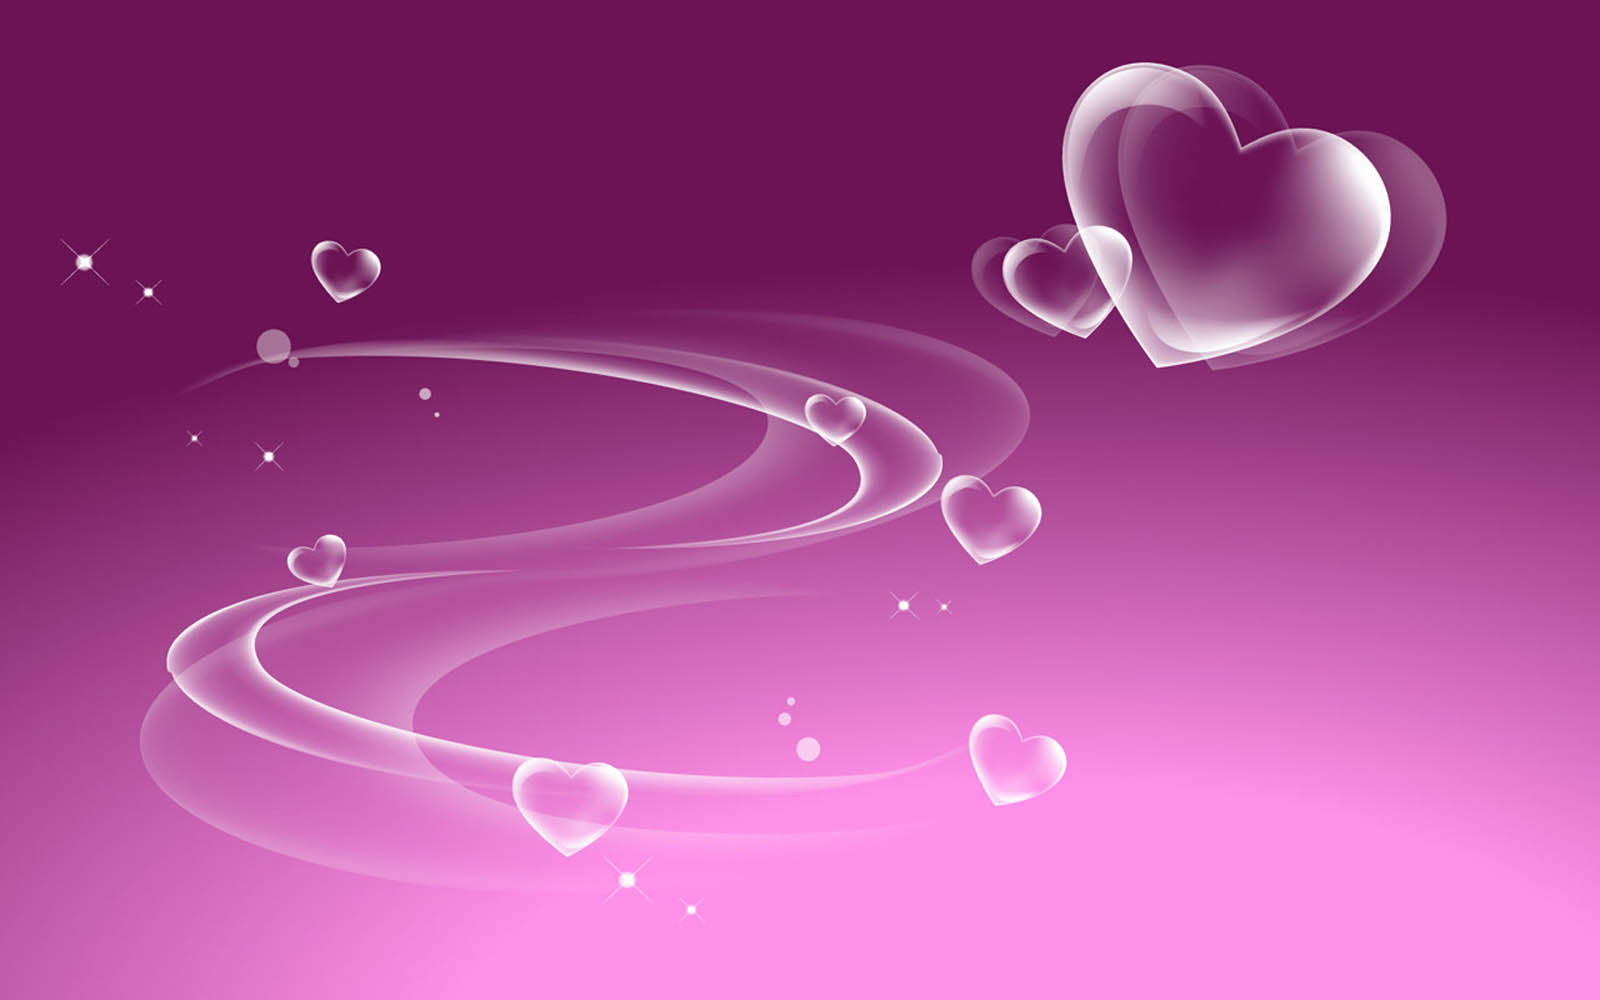 The Heart Love Wallpaper Desktop